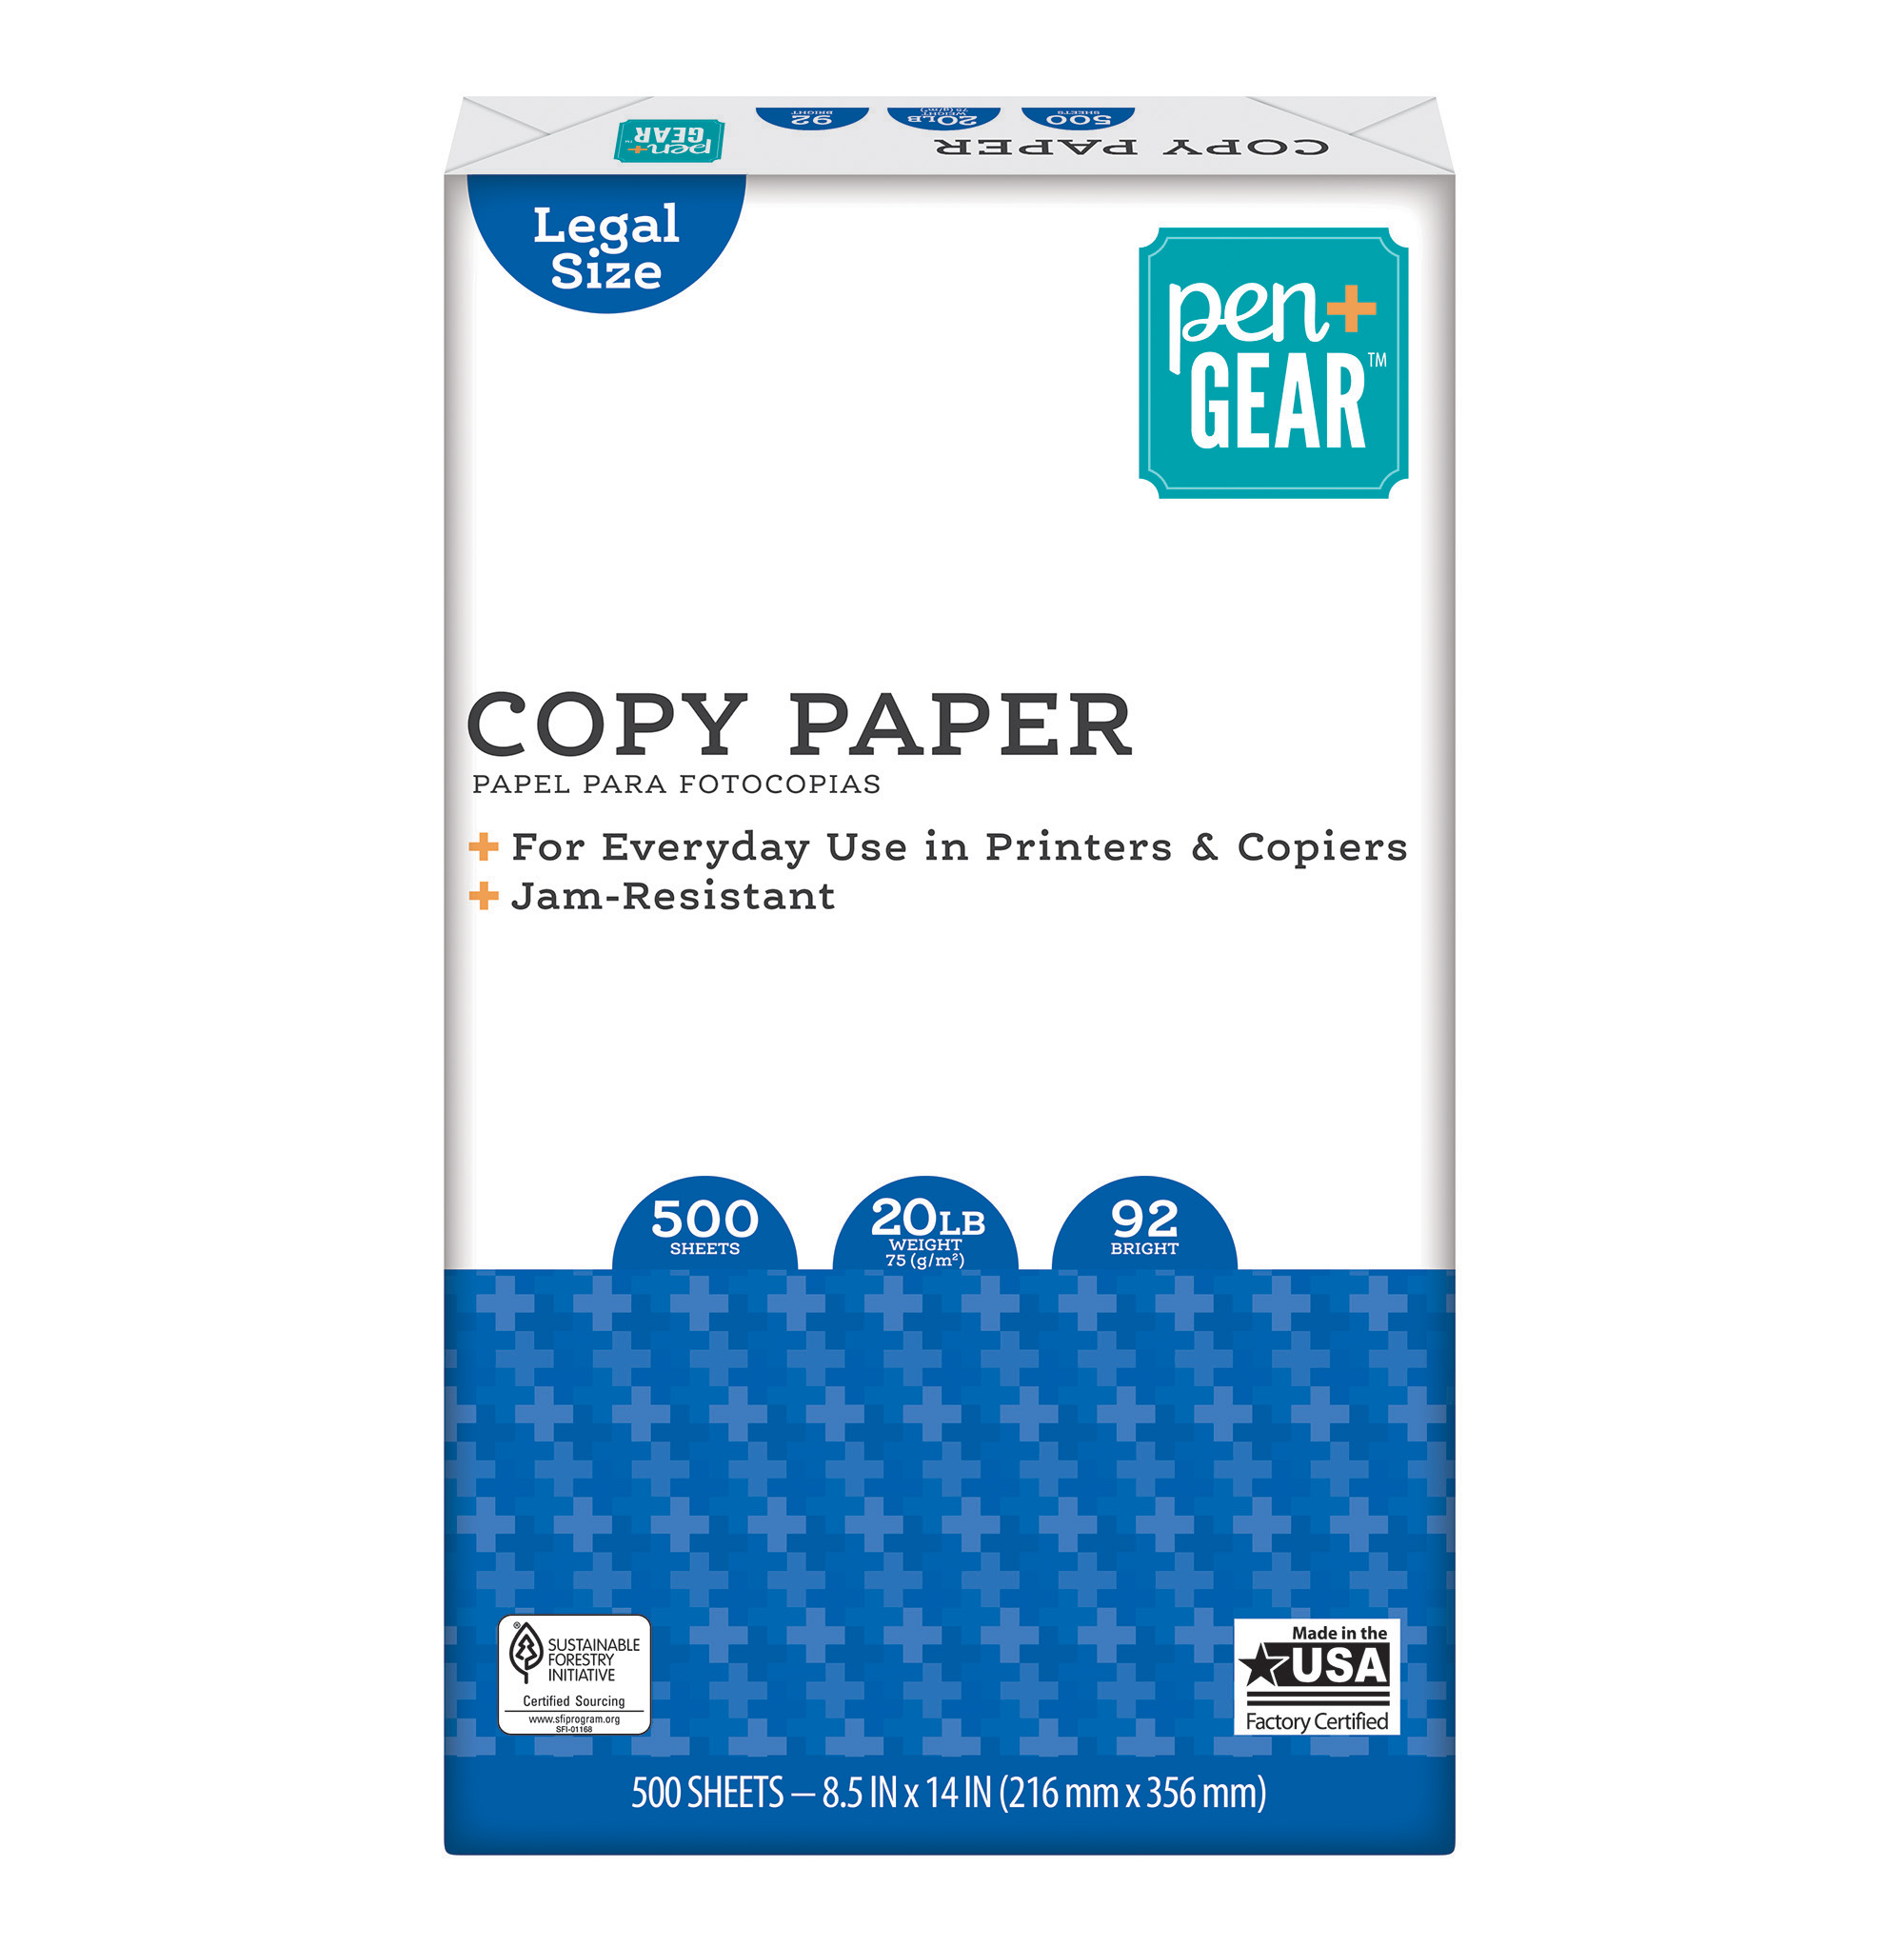 Pen+Gear Copy Paper, 8.5" x 14", Legal Size, 92 Bright, White, 20 lb., 1 Ream (500 Sheets) - image 3 of 8